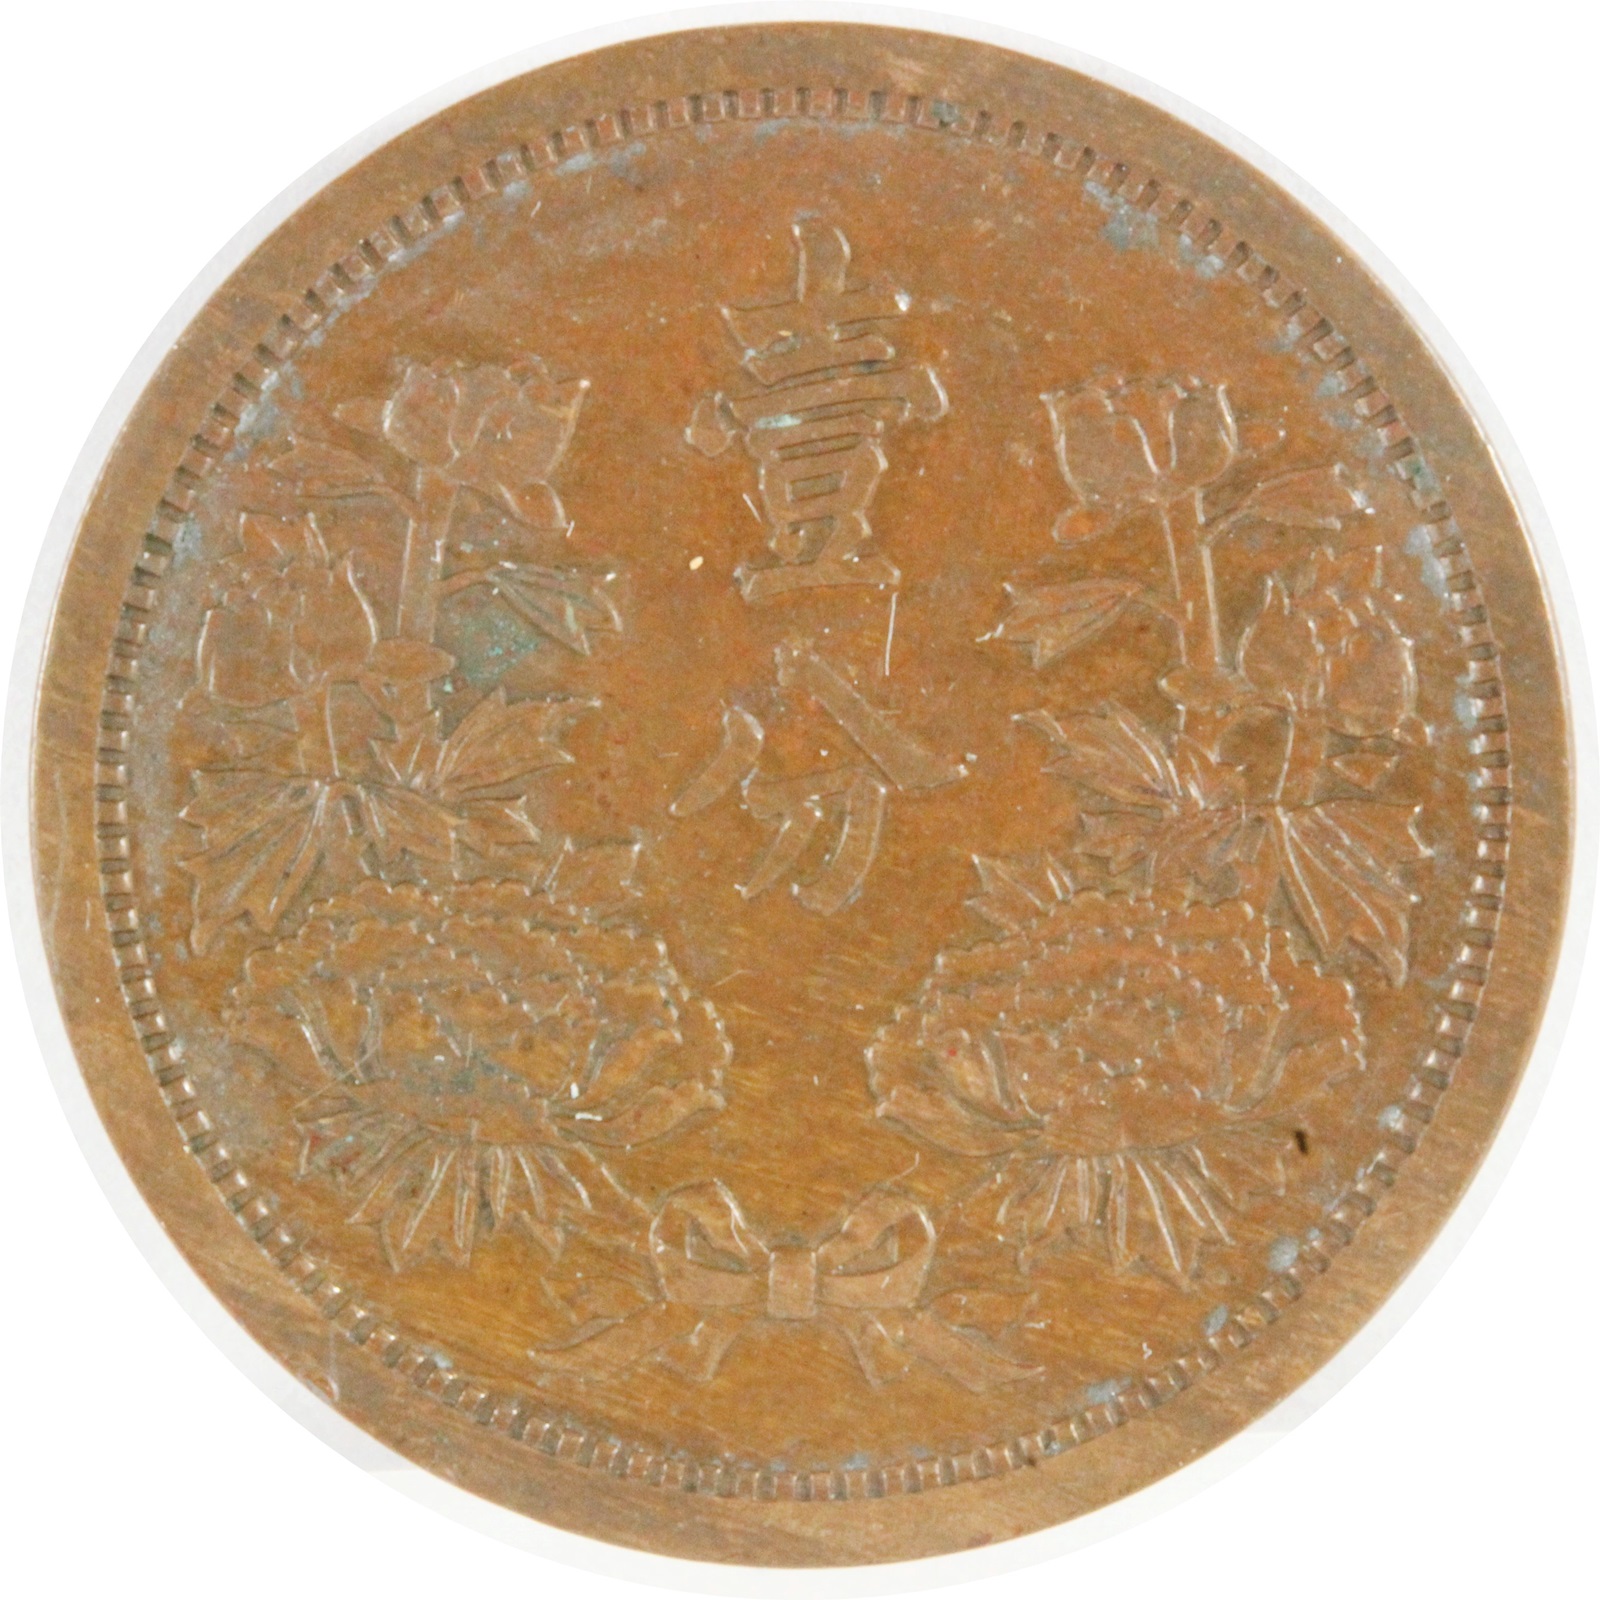 PCGS MS63RB 満州 壹分 康徳2年 在外 銅貨 古銭-silversky